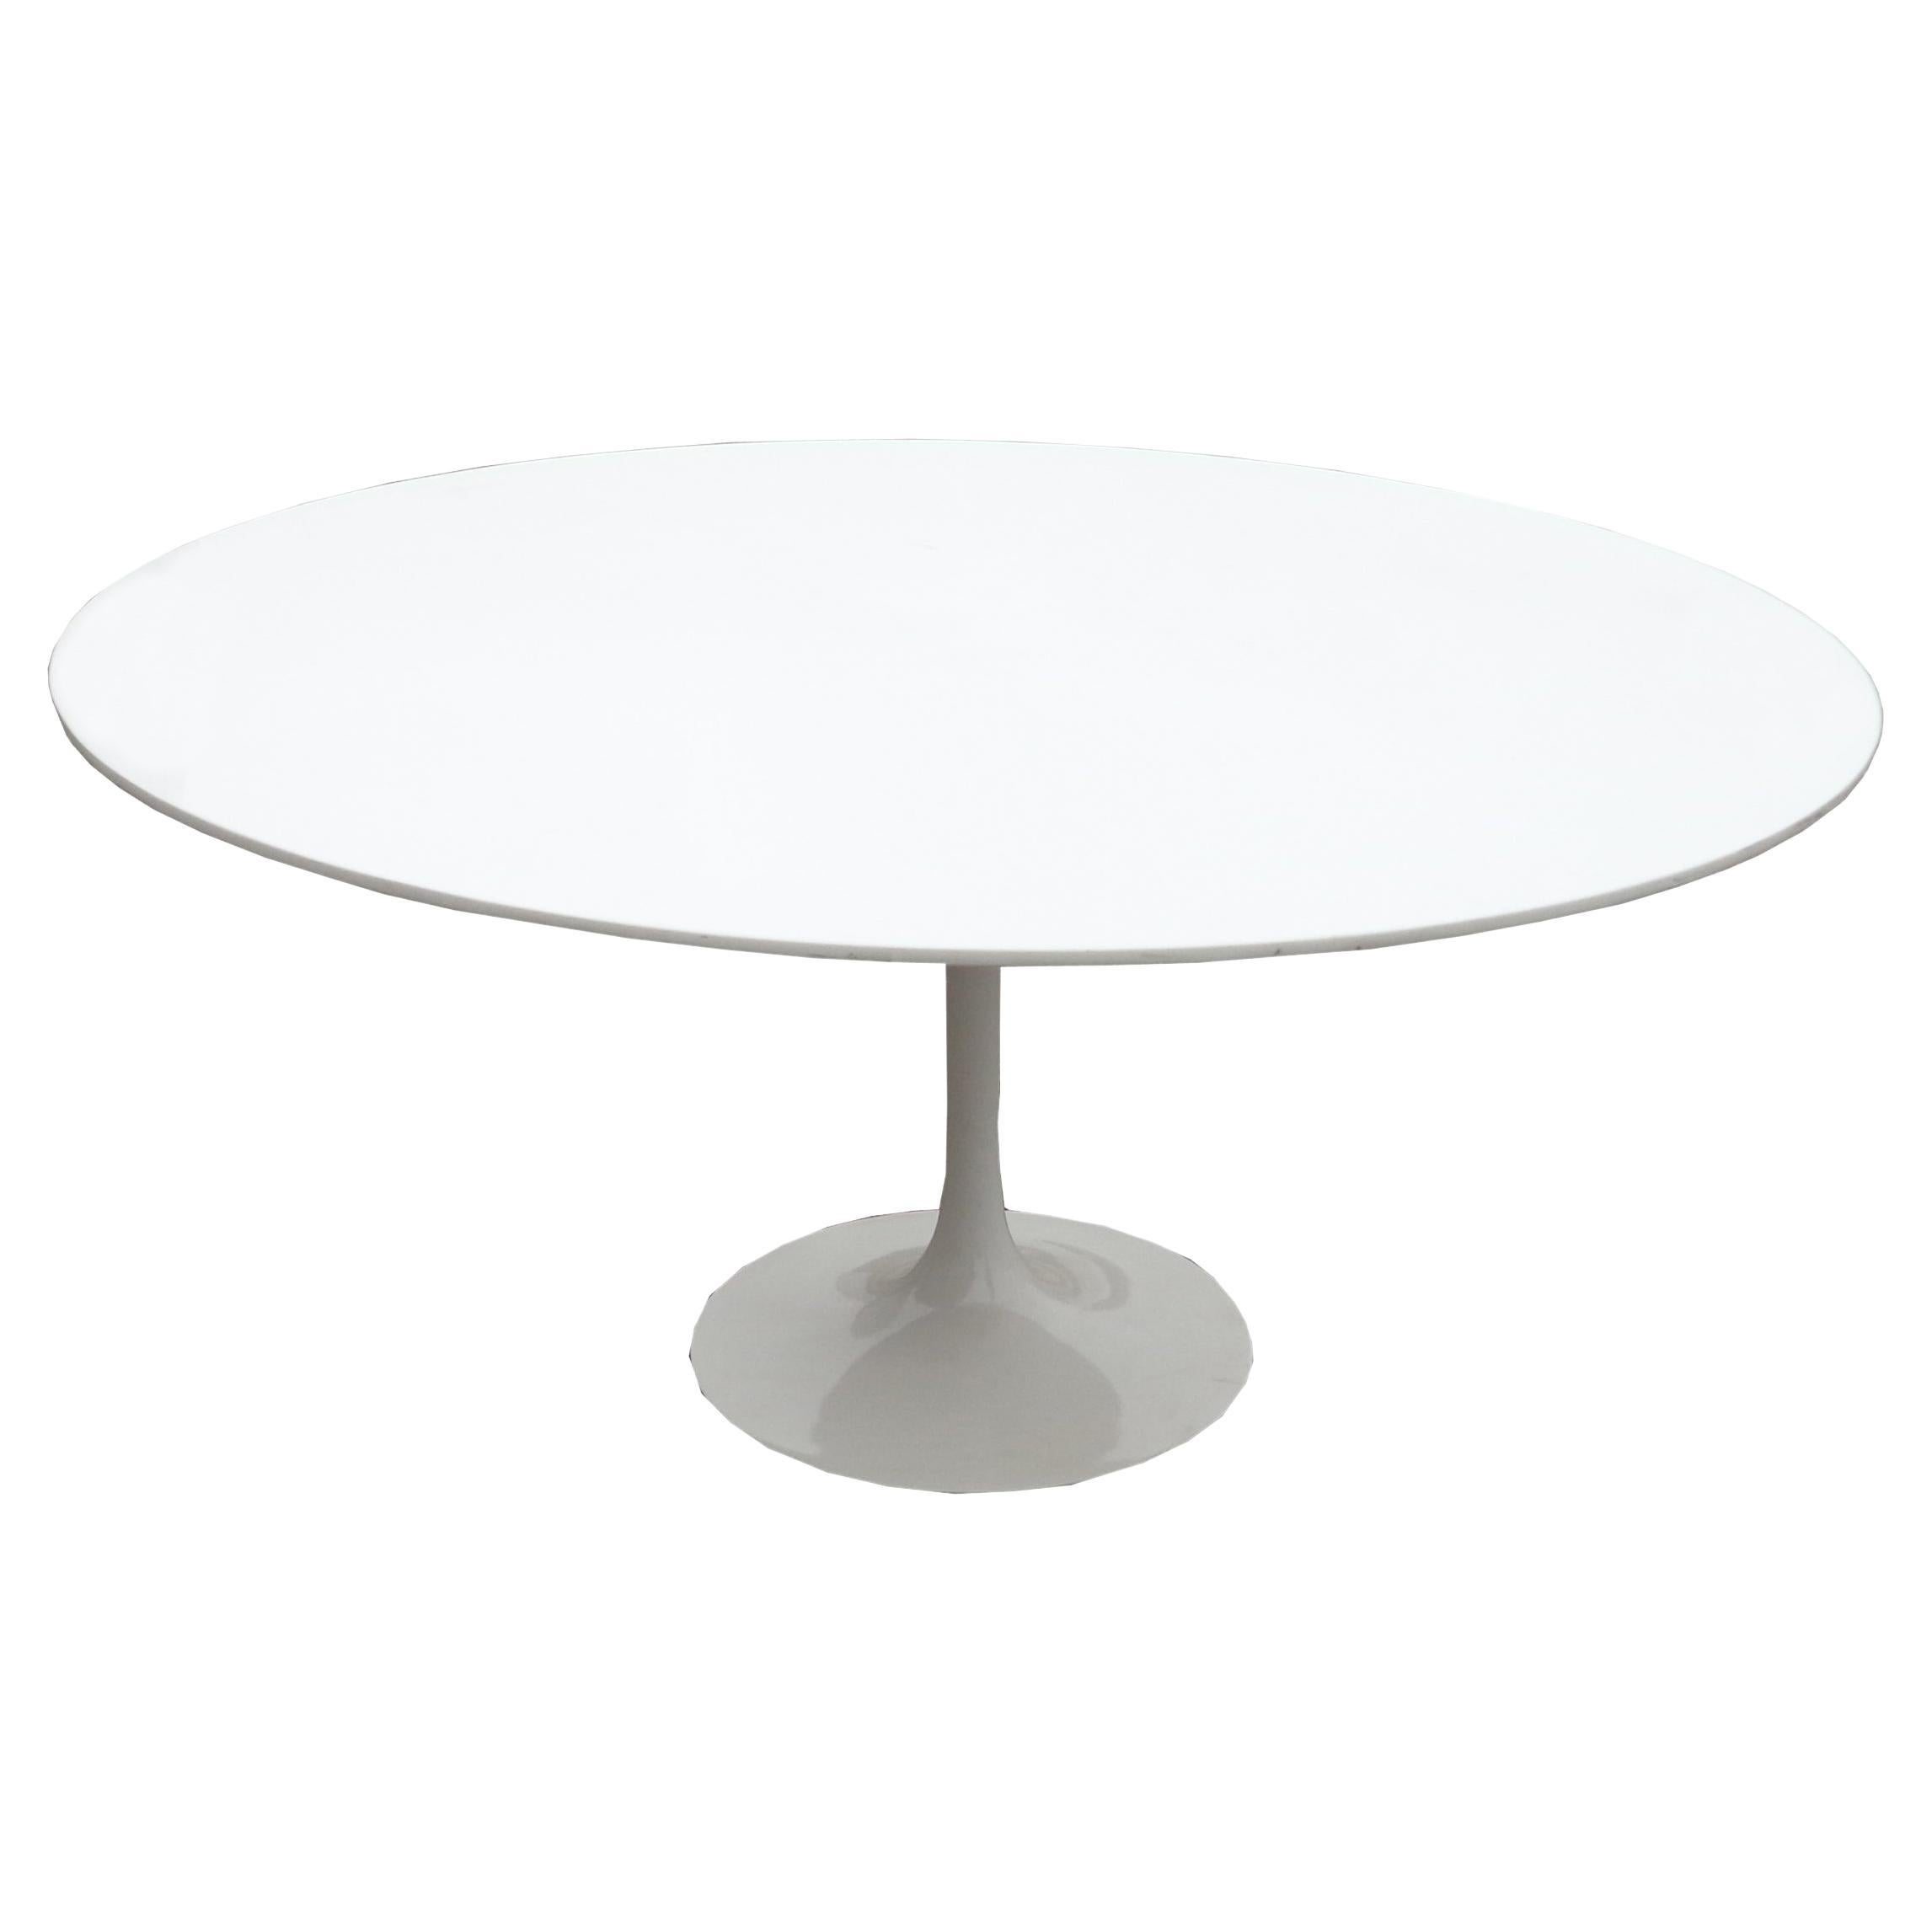 Knoll Saarinen Table with Custom Ice White Ceramic Top